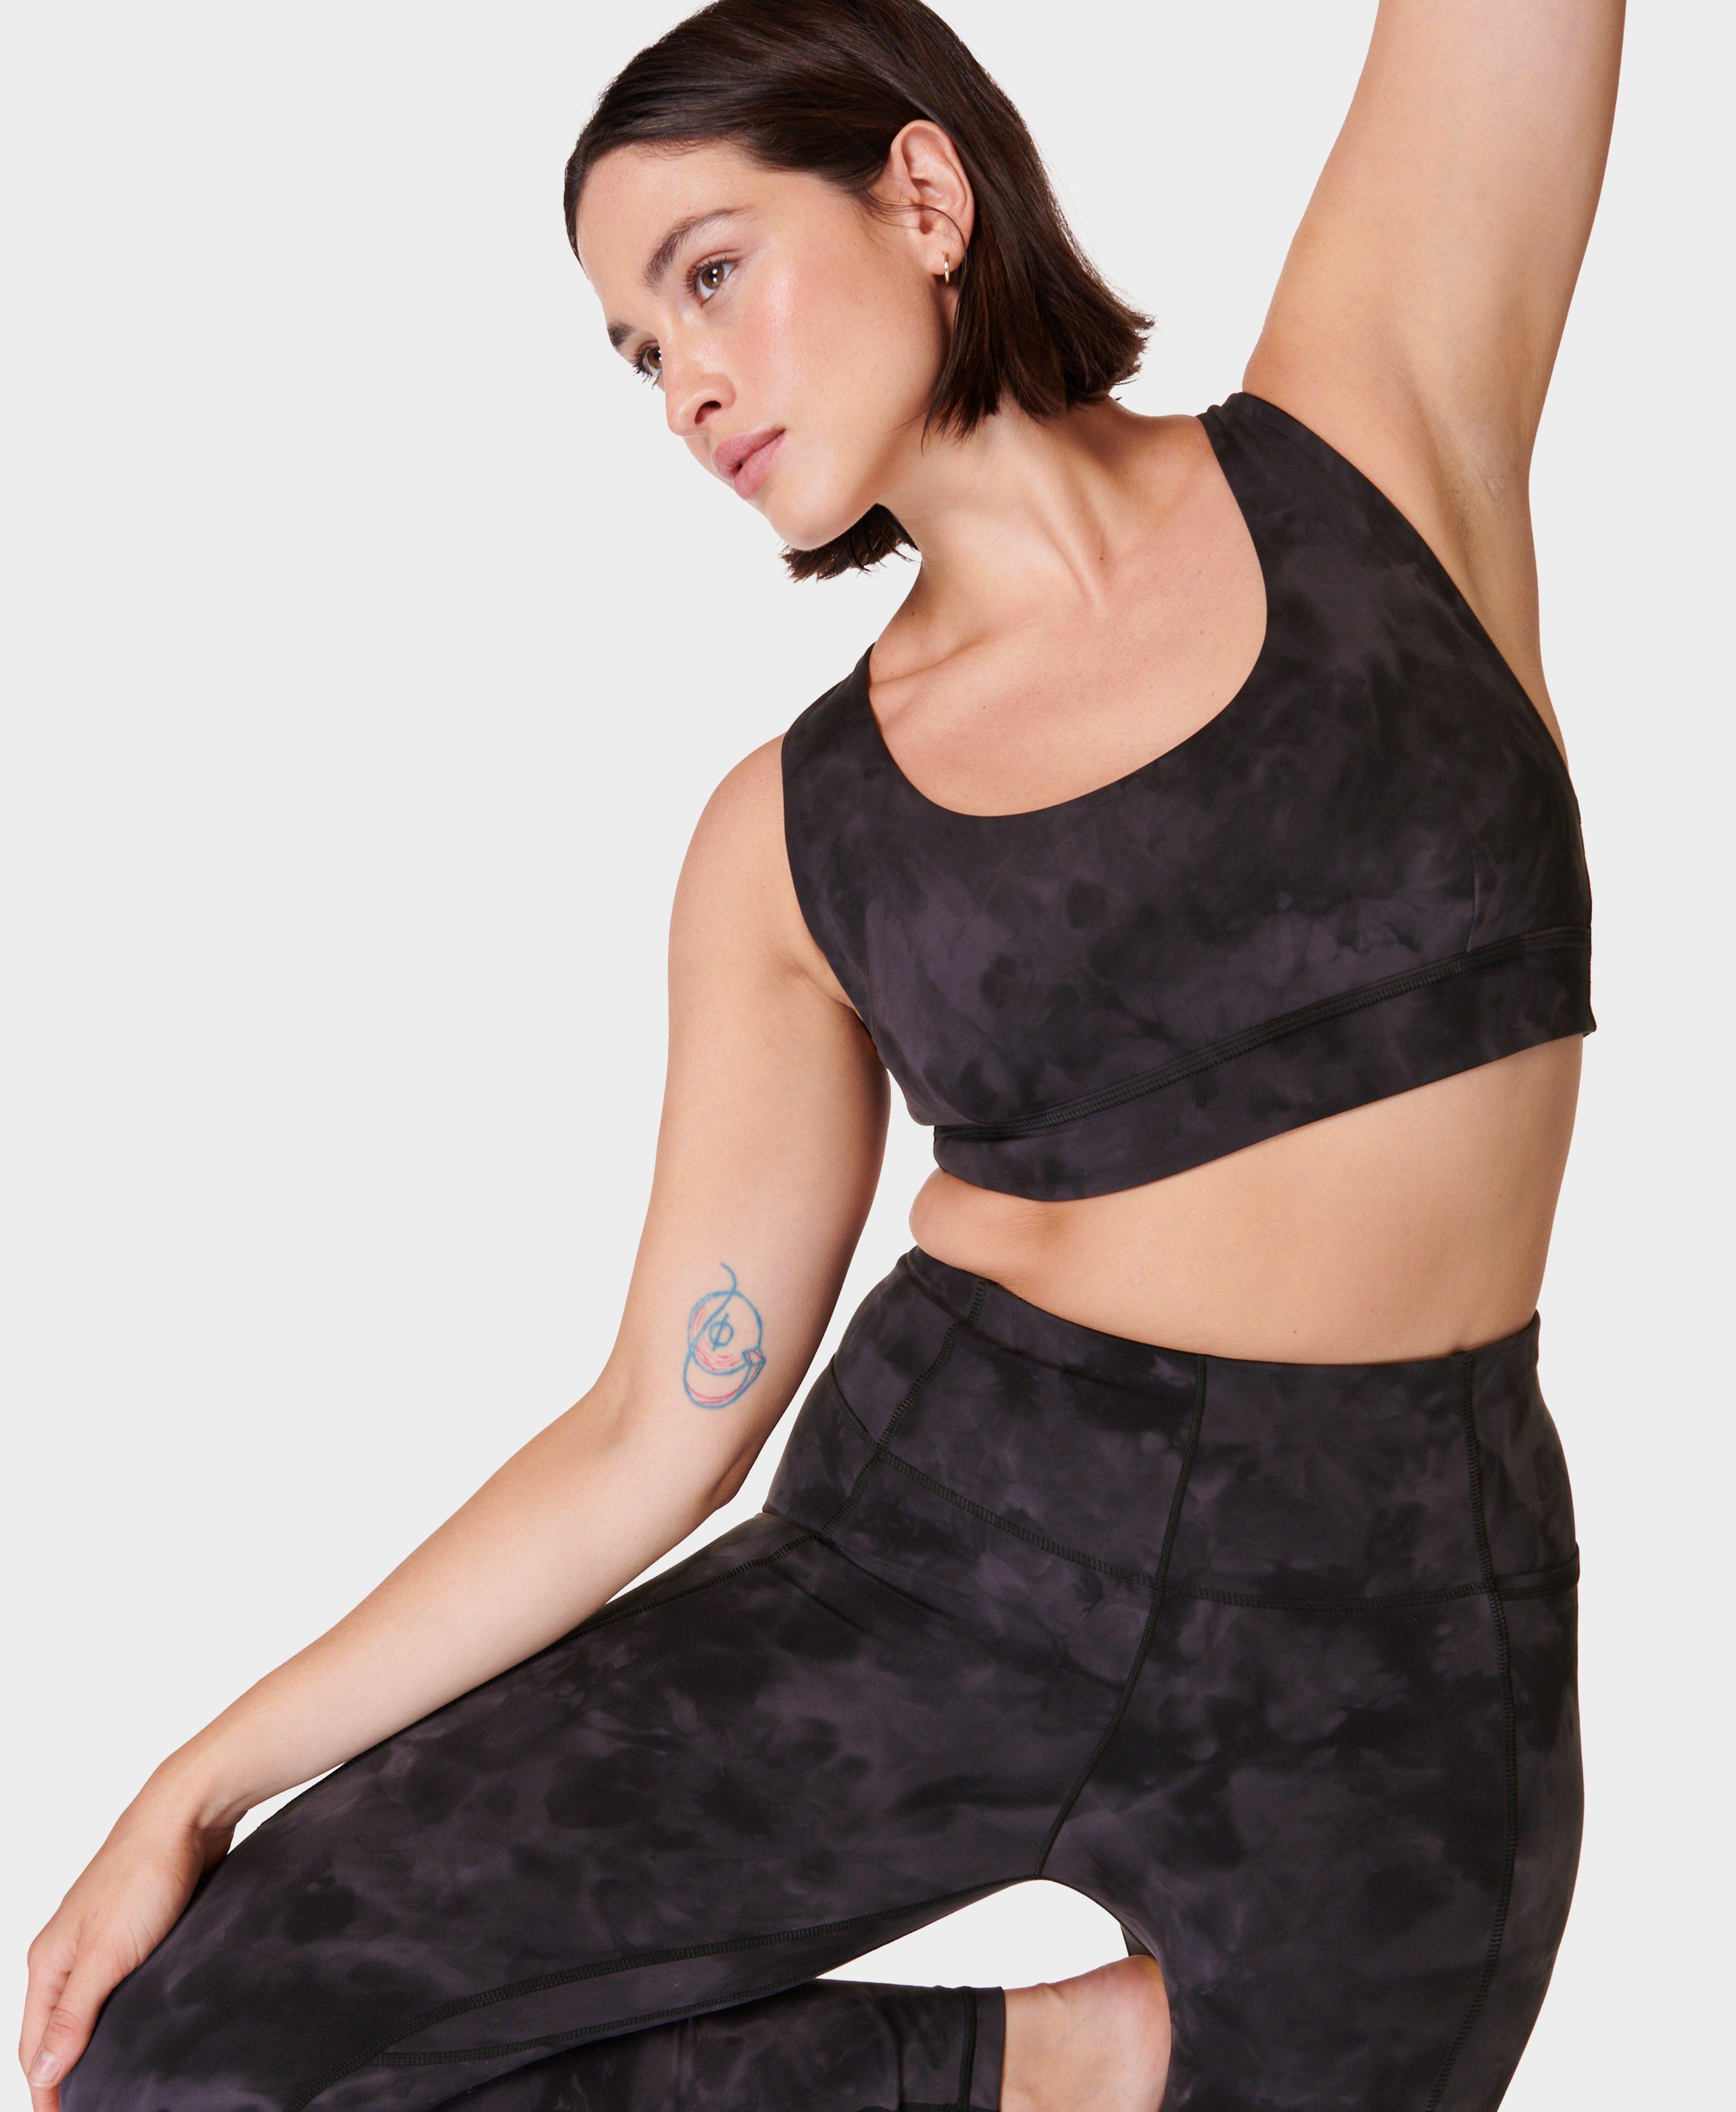 myang Women's Sports Yoga Bra with Pocket Sports Bra at Back Black